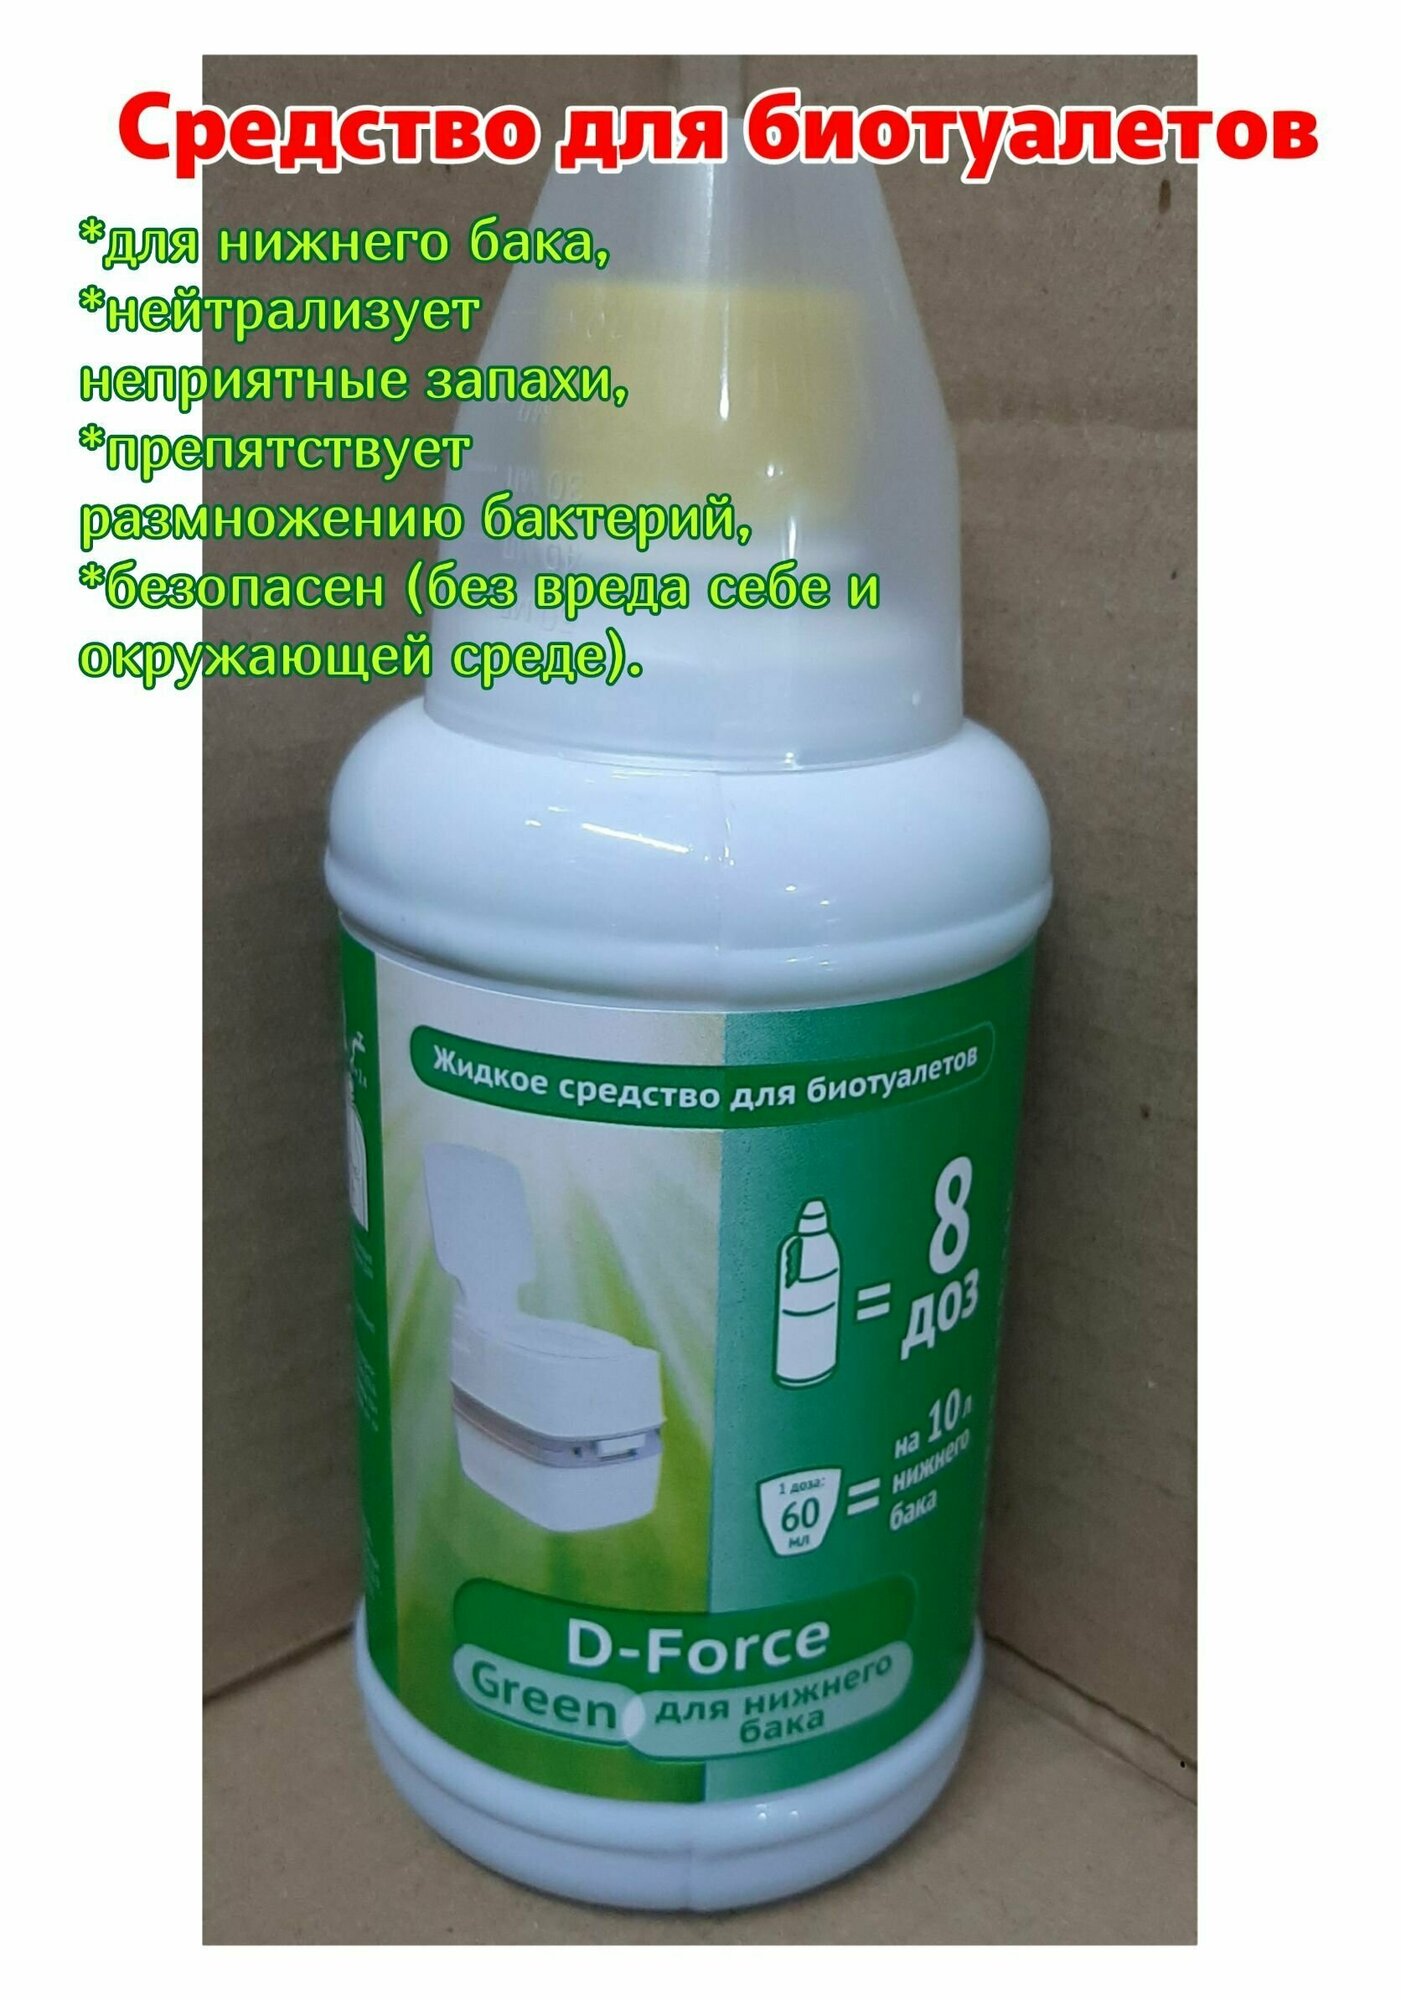 Жидкое средство для биотуалетов D-Force Green для нижнего бака 500мл - фотография № 2